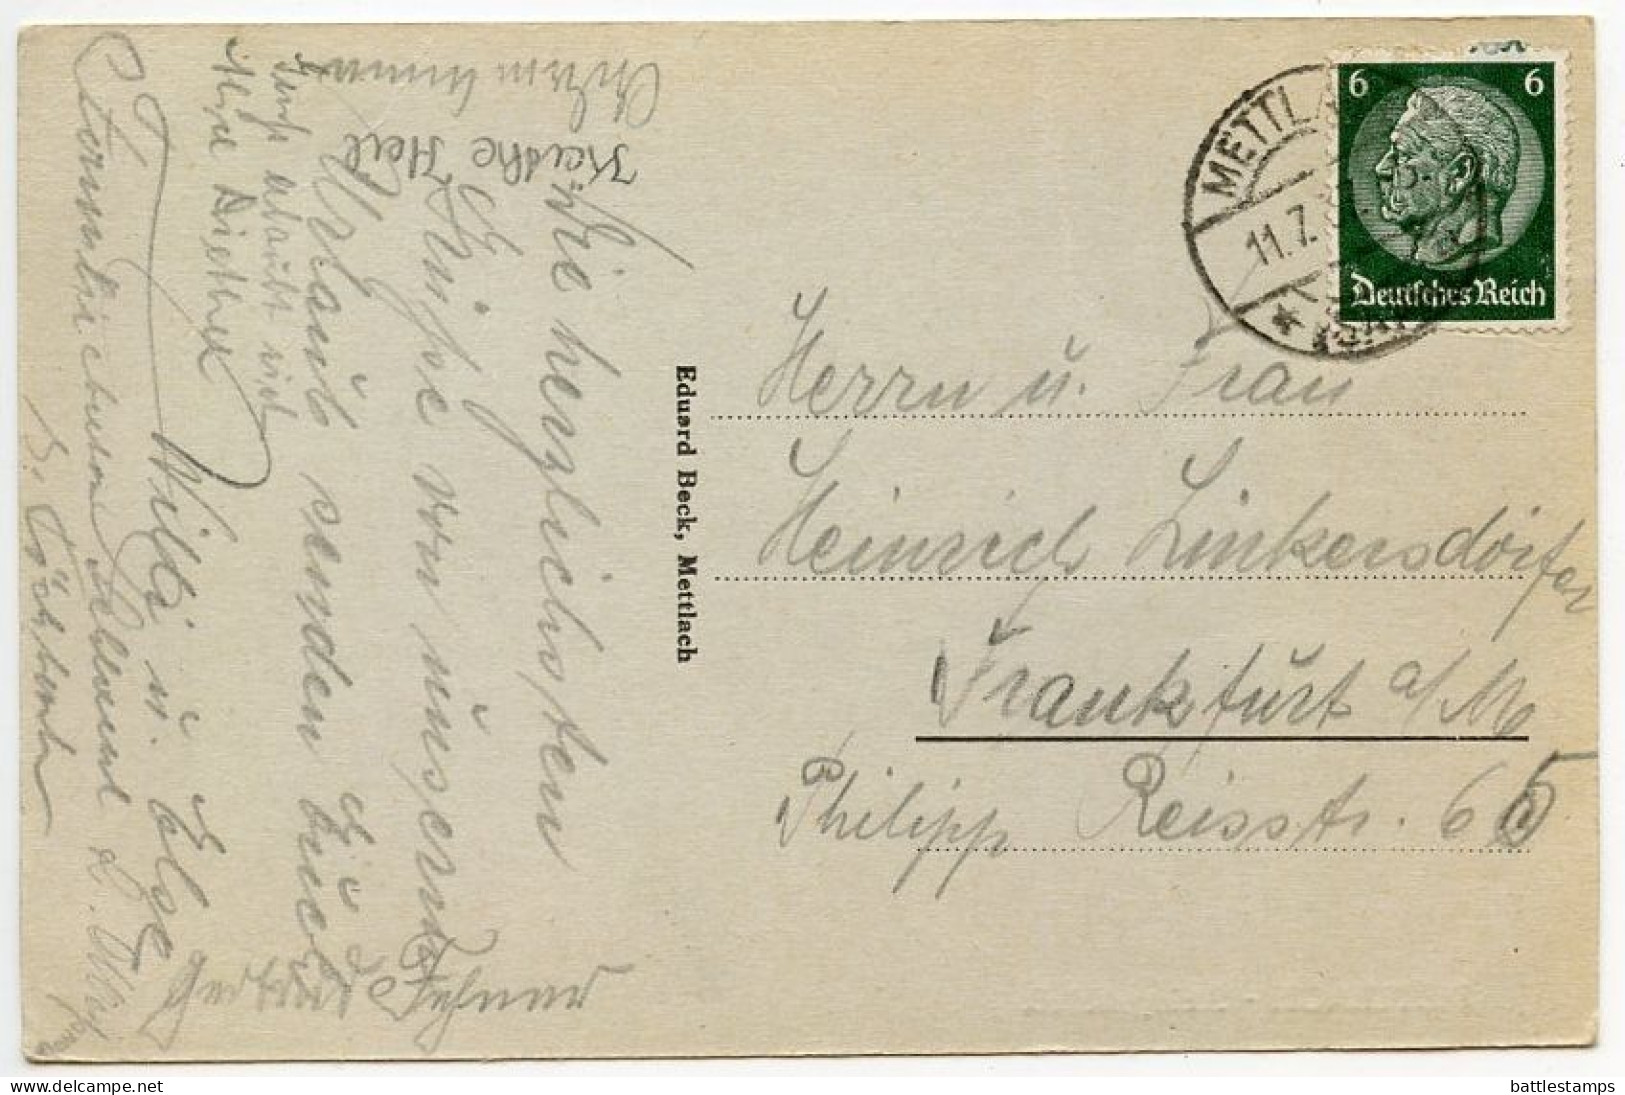 Germany 1937 Postcard Mettlach - Steingutfabrik; 6pf. Hindenburg Stamp - Kreis Merzig-Wadern